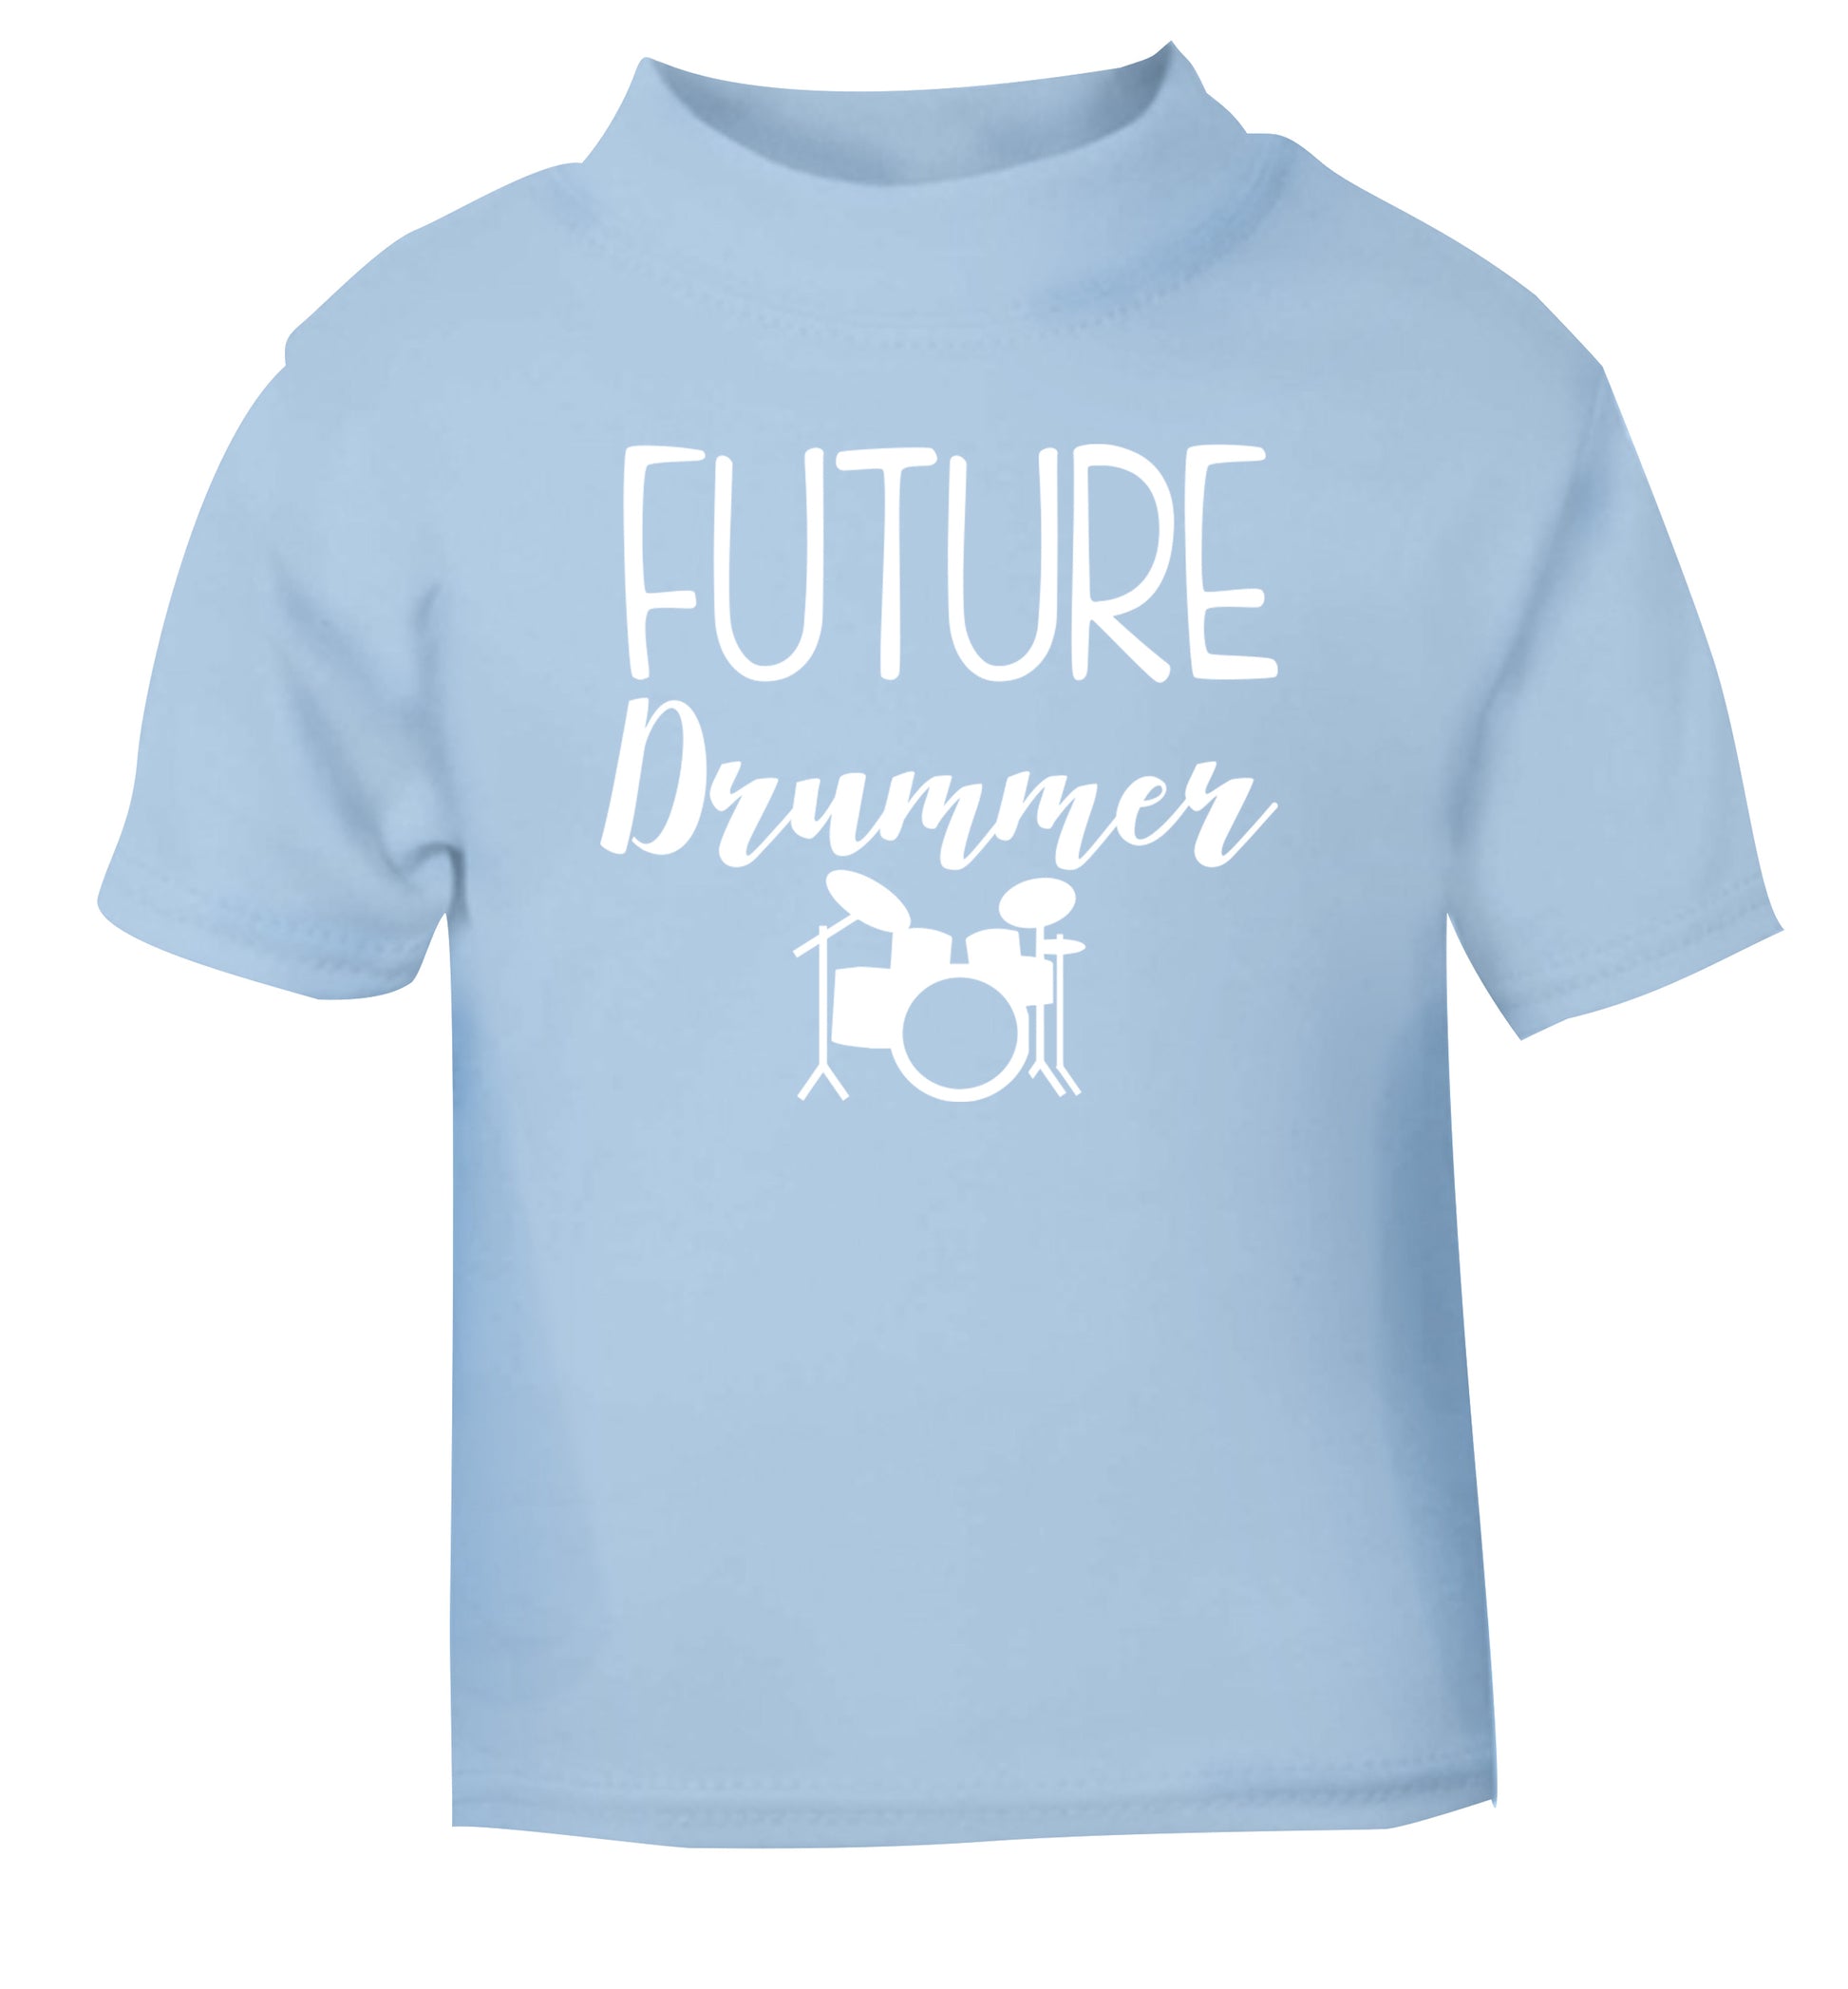 Future drummer light blue Baby Toddler Tshirt 2 Years